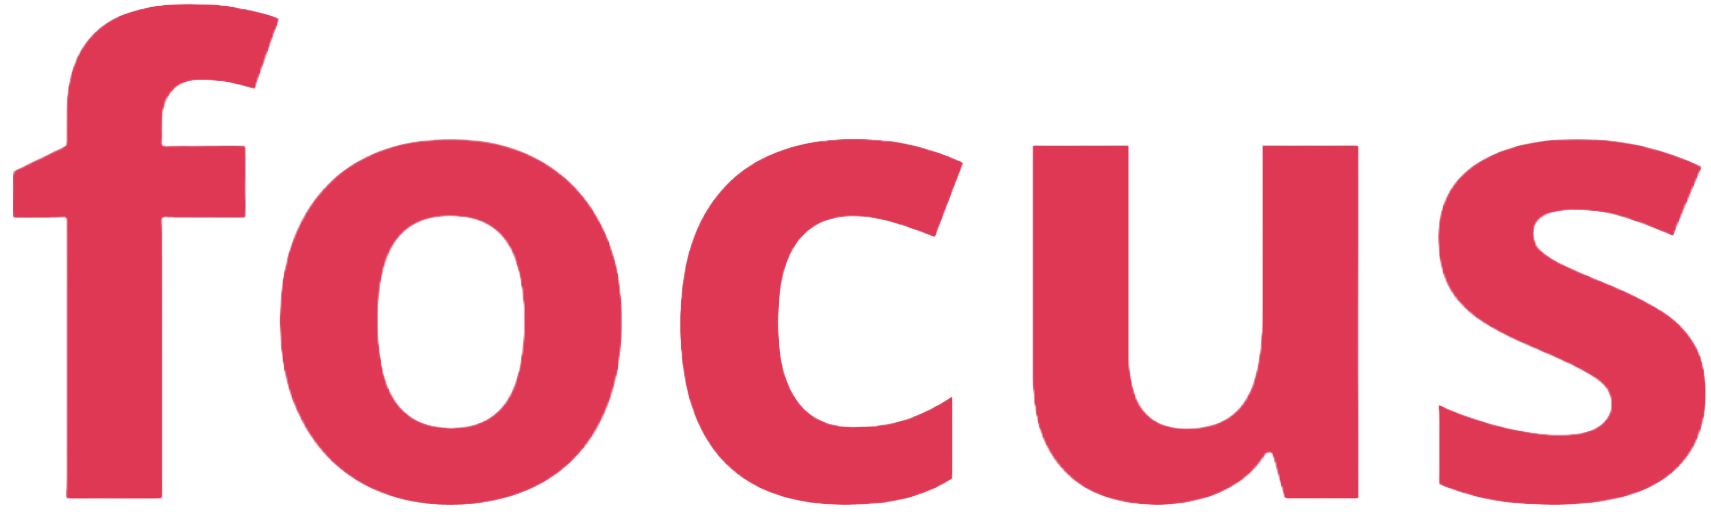 Logo for Focus Consulting